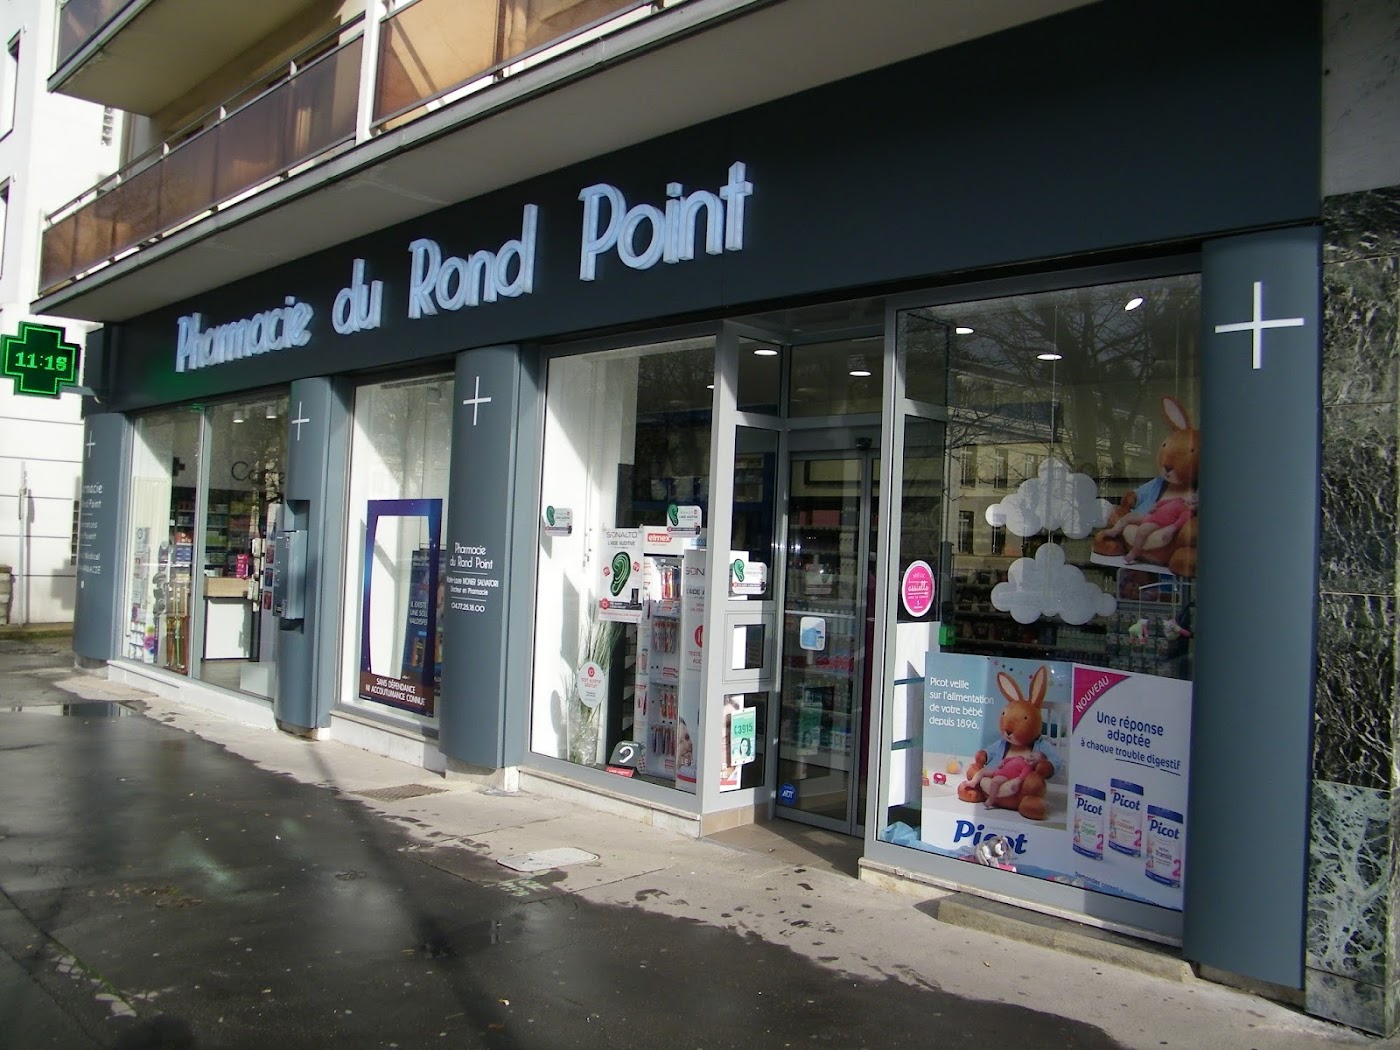 Pharmacie du Rond Point